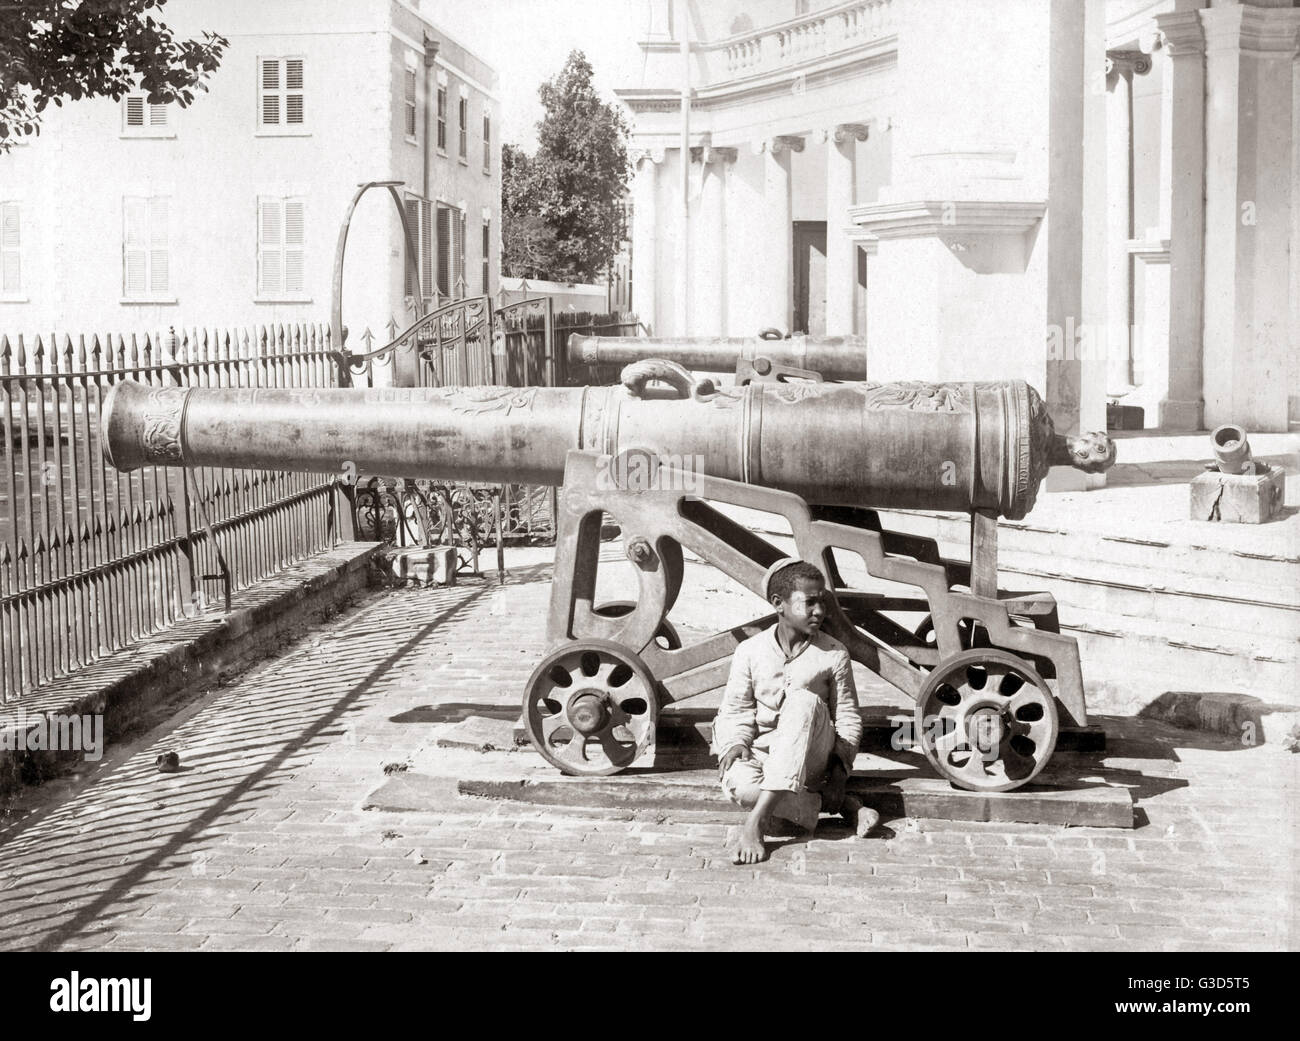 Spanish Town, Jamaica, circa 1900 - Old cannon Stock Photo